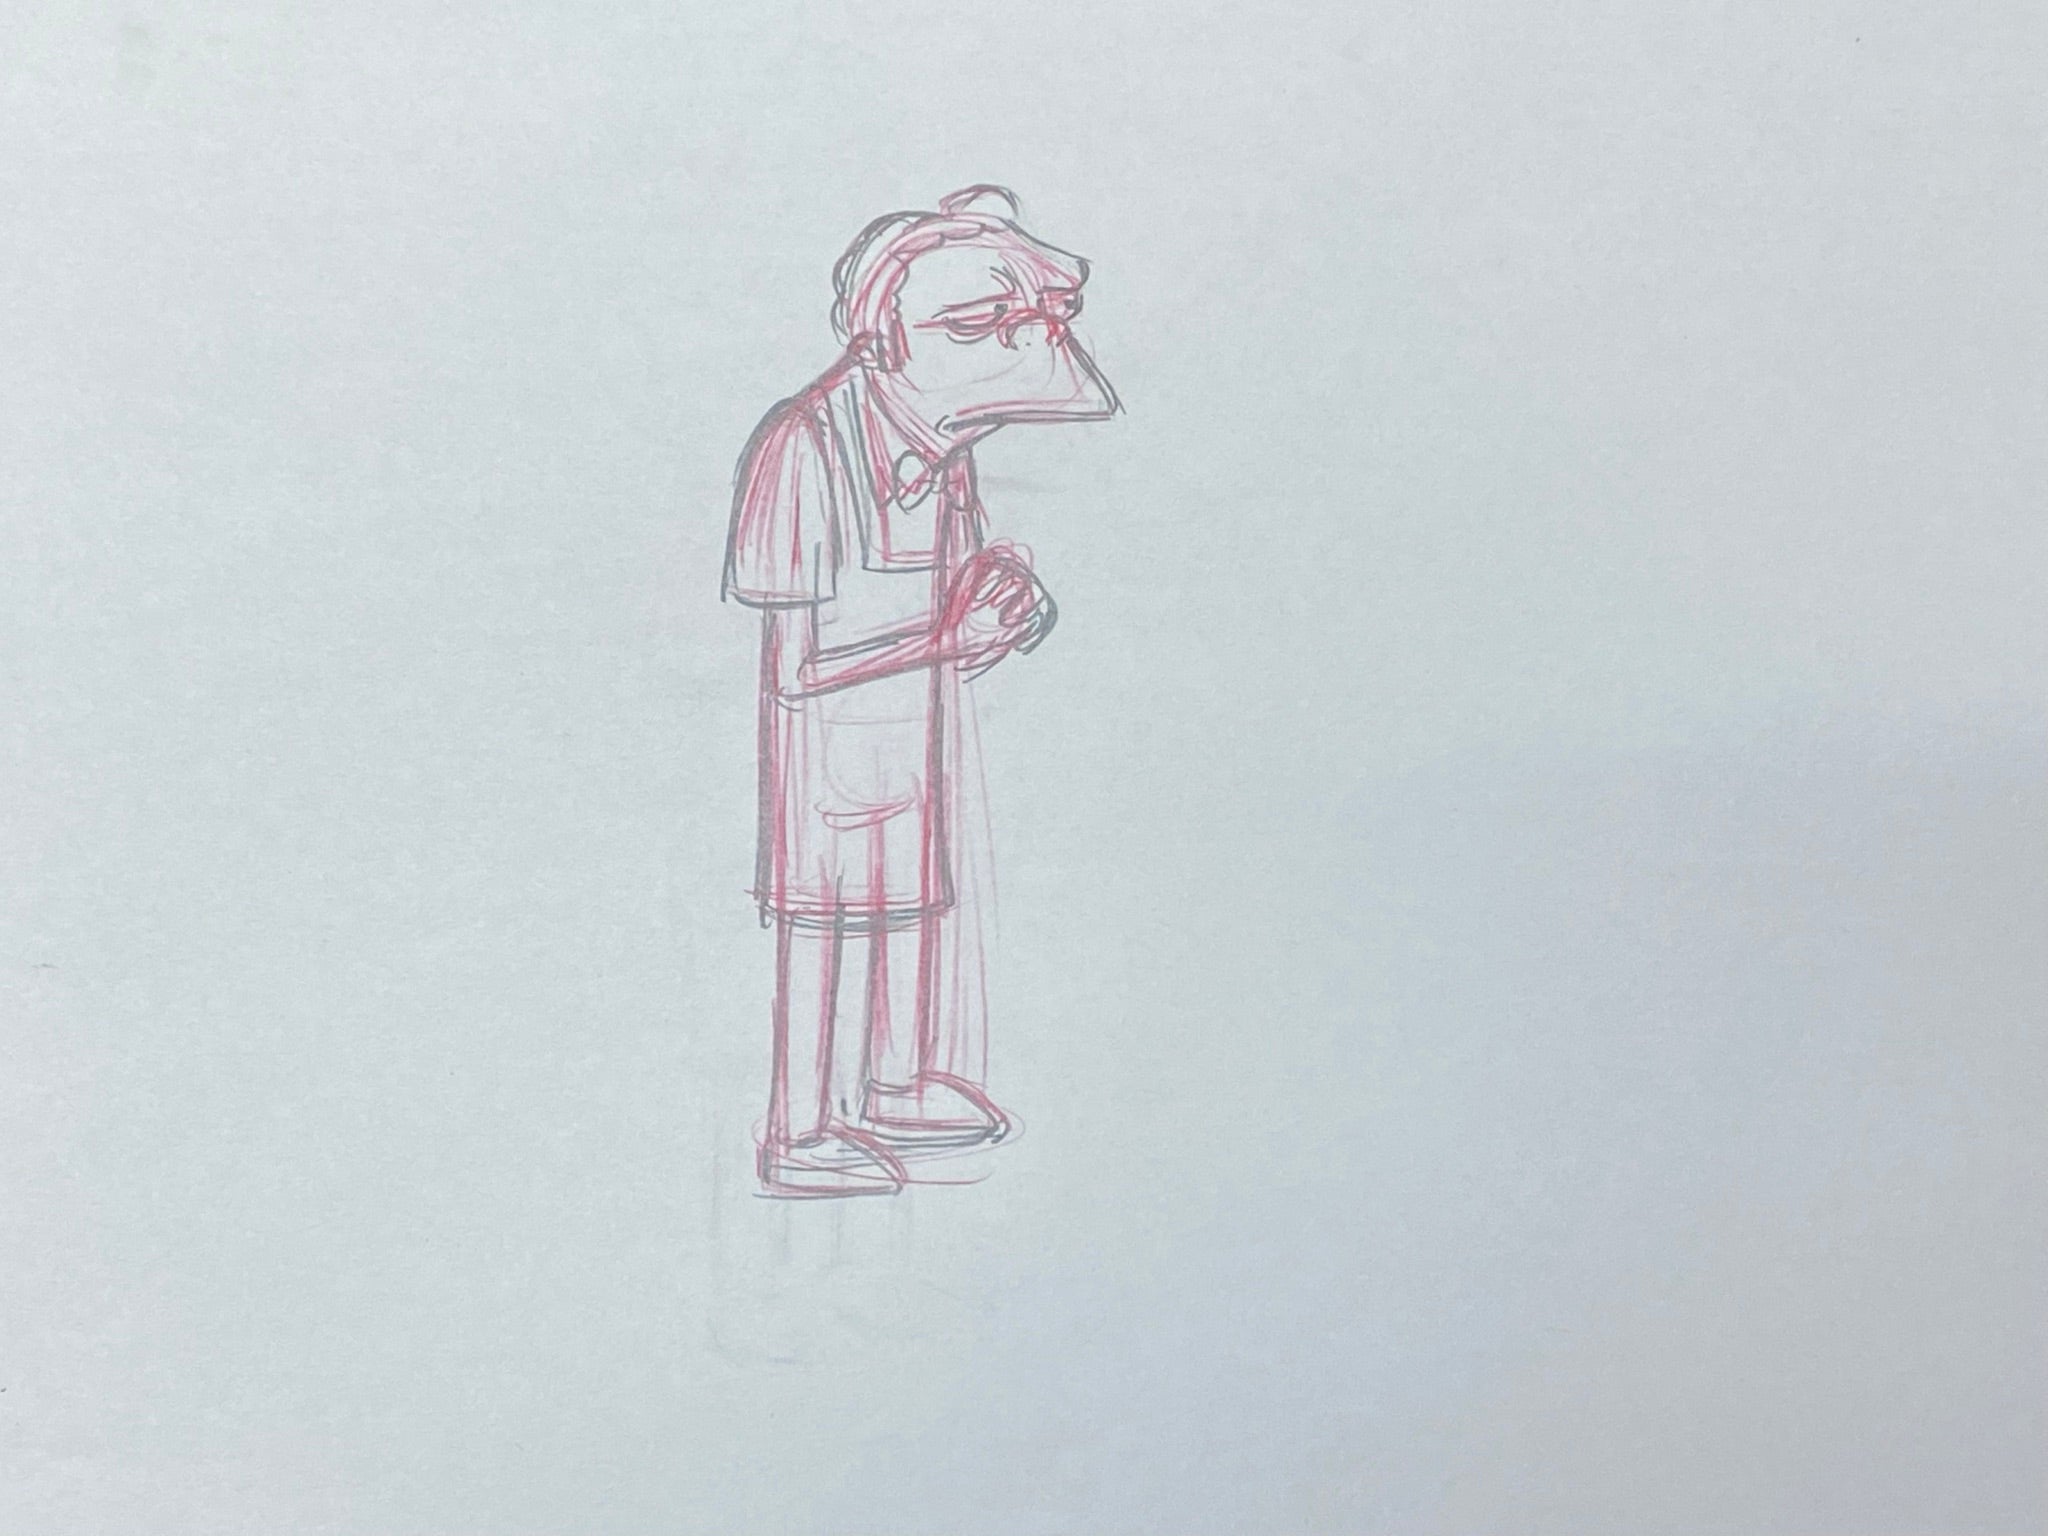 The Simpsons - Original drawing of Bleeding Gums Murphy – Gallery